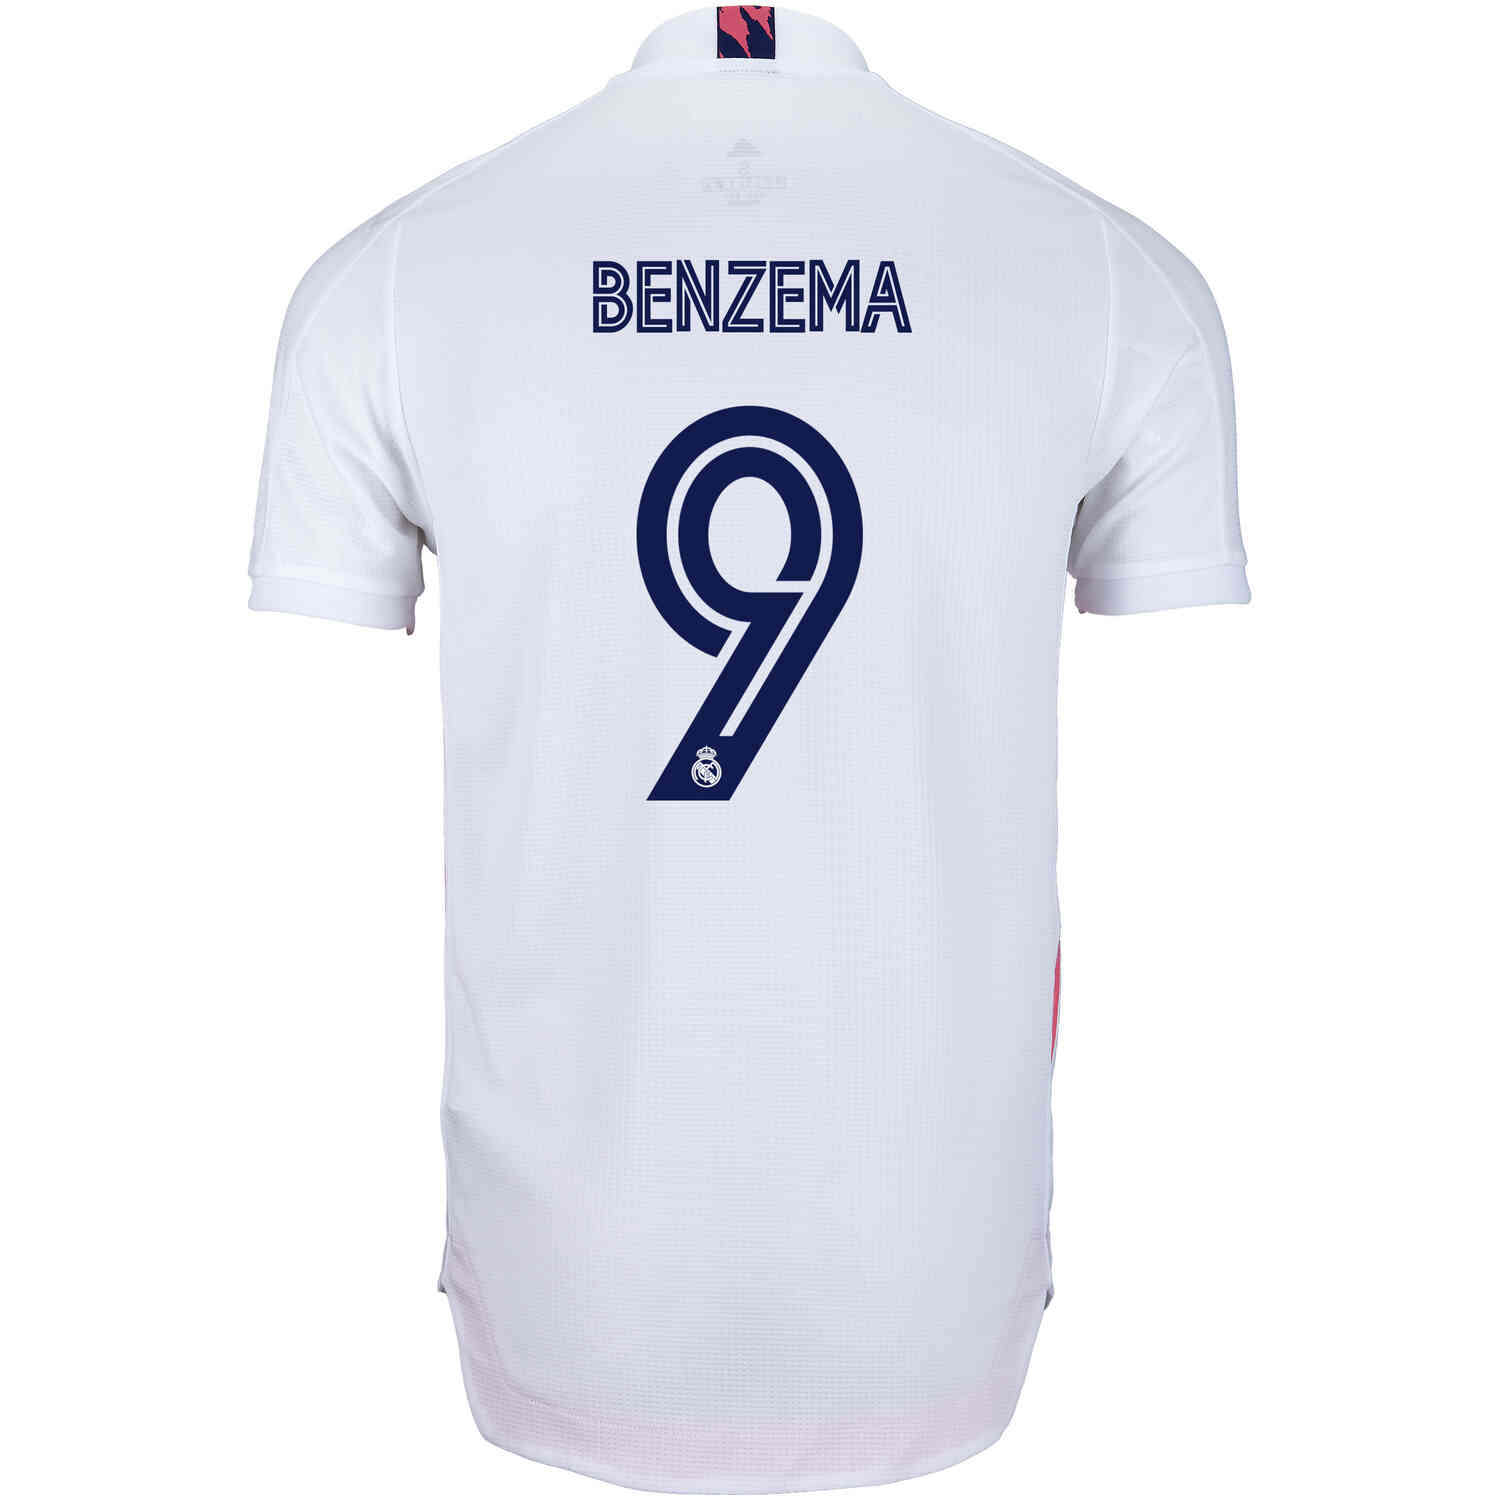 benzema real madrid t shirt